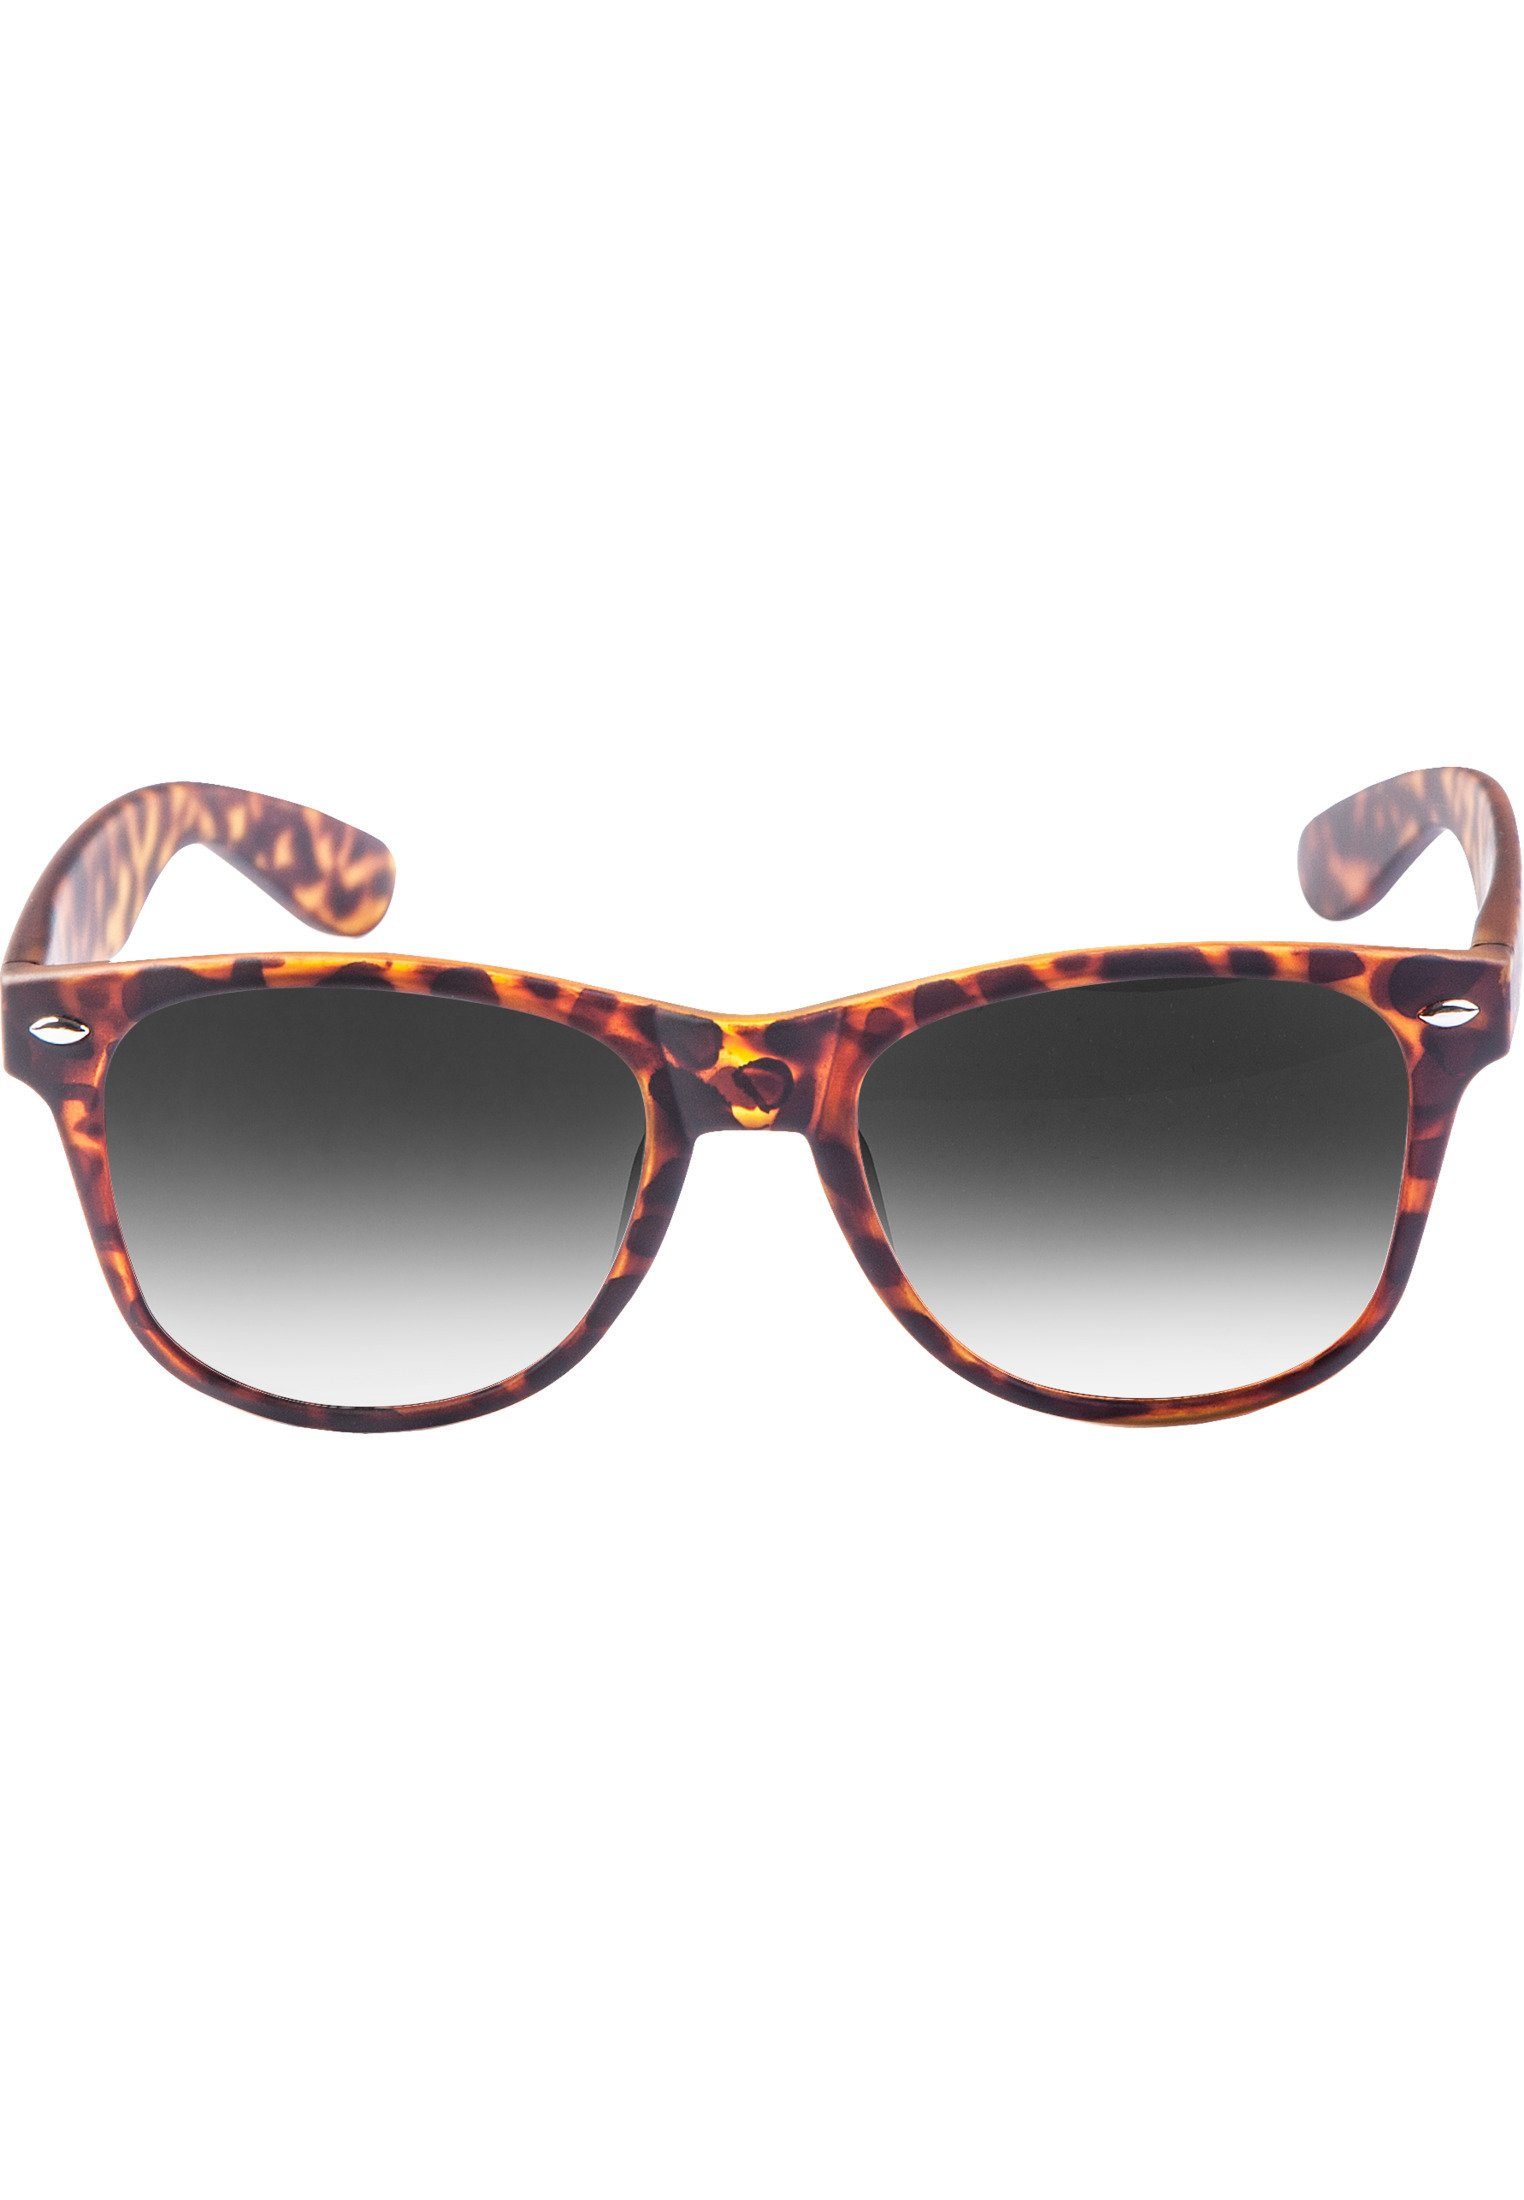 MSTRDS Sonnenbrille Accessoires Sunglasses Likoma Youth havanna/grey